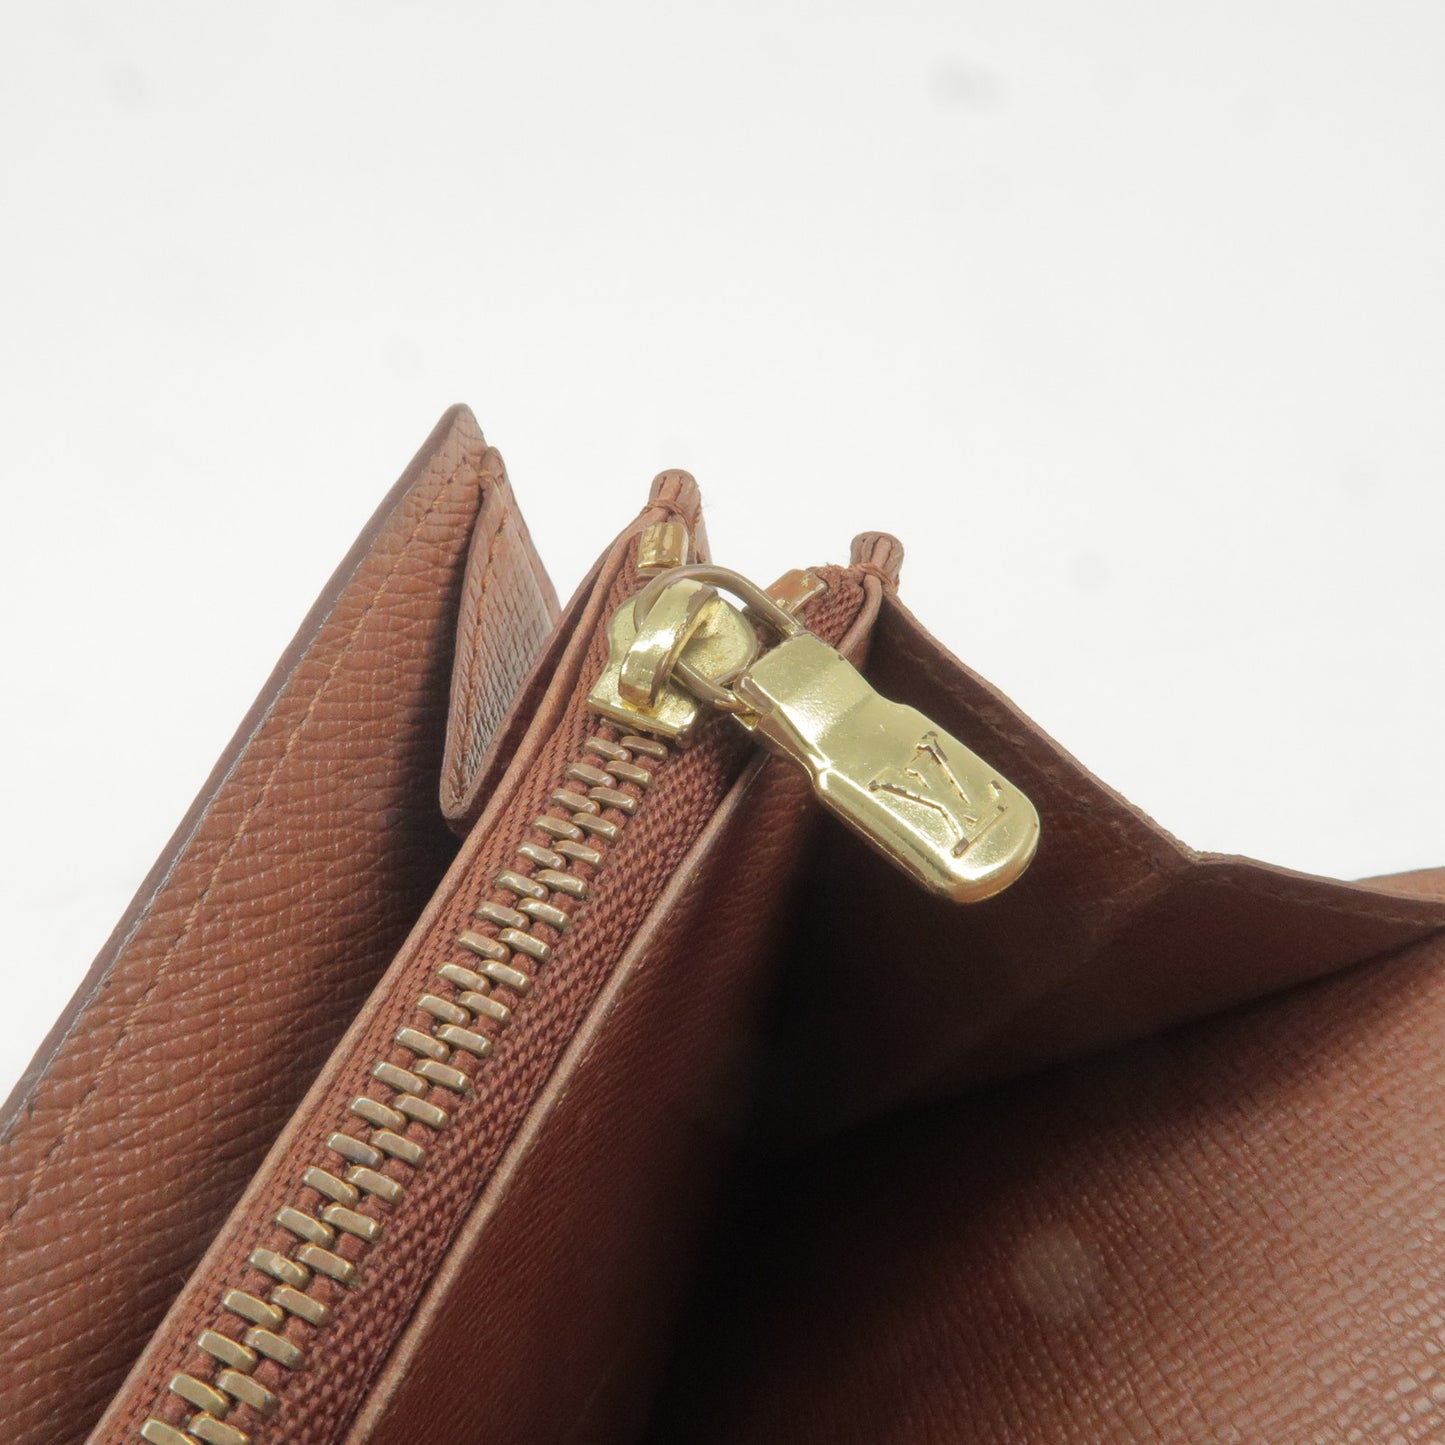 Louis Vuitton Monogram Set of 3 Wallet Bi-Fold Wallet Flap Wallet